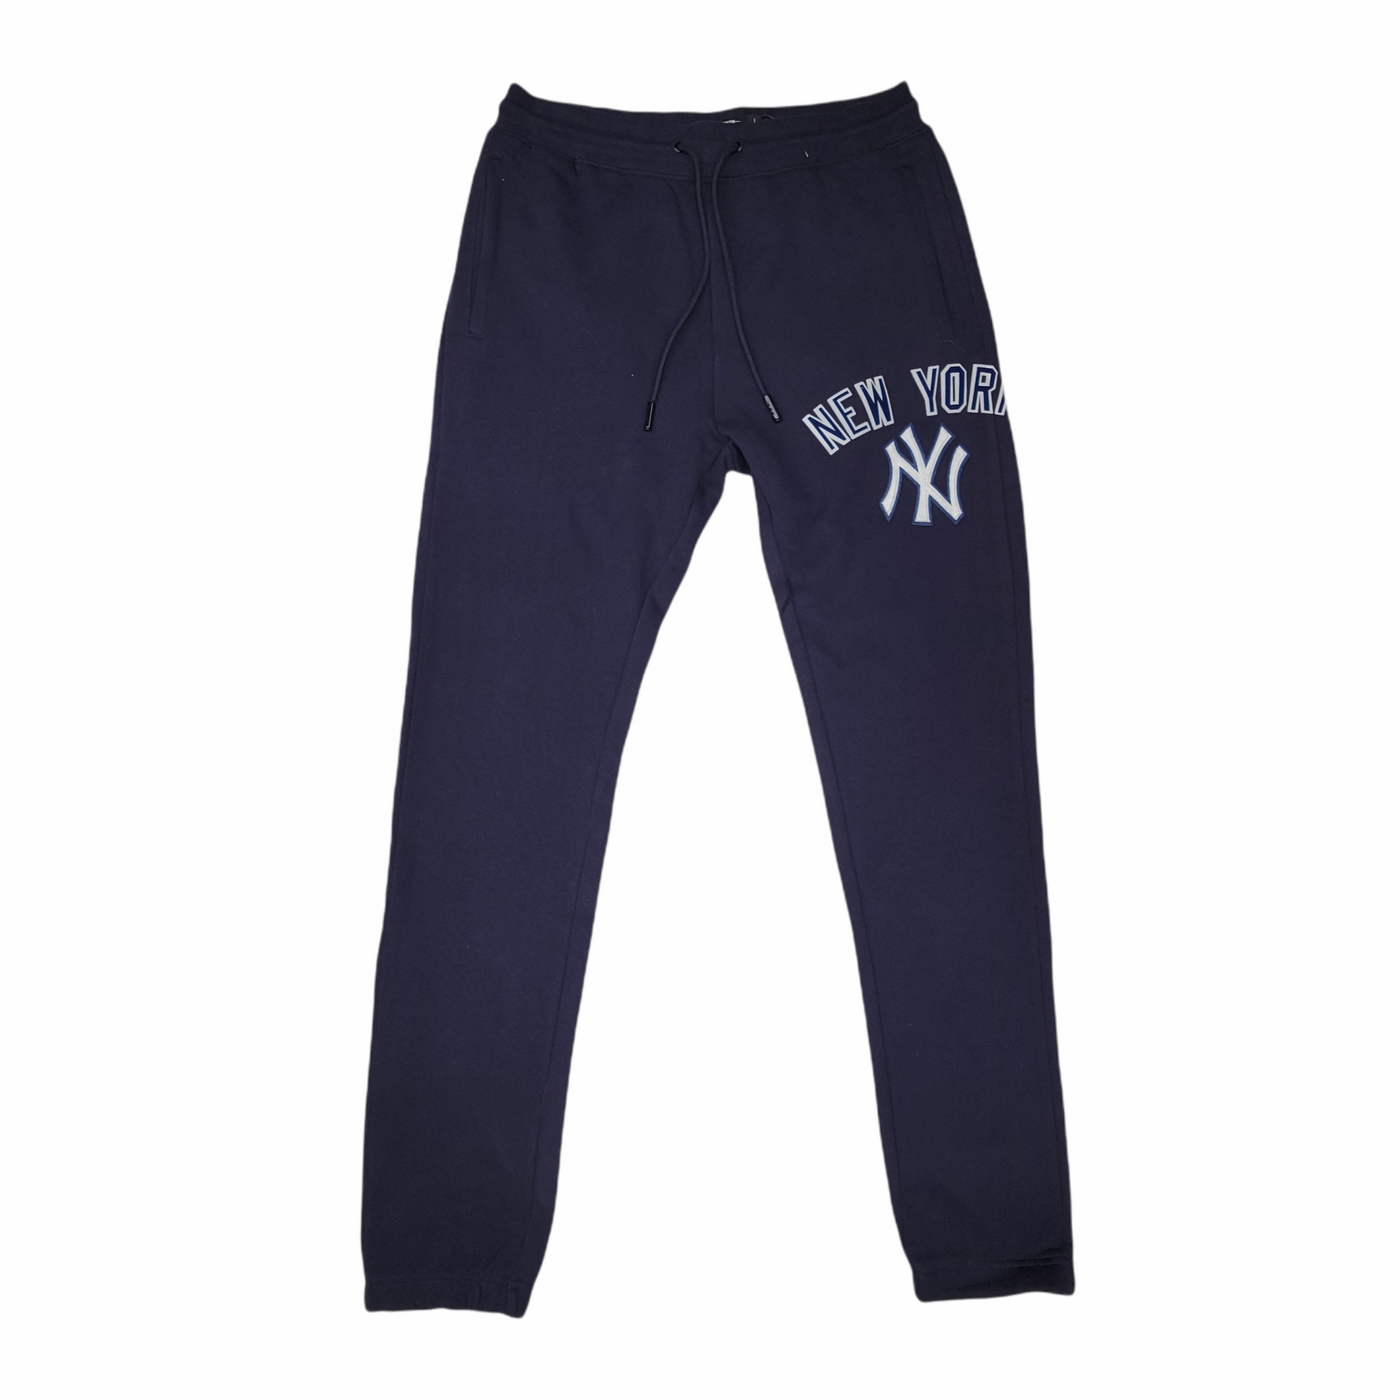 New York Yankees Sweatpants Navy